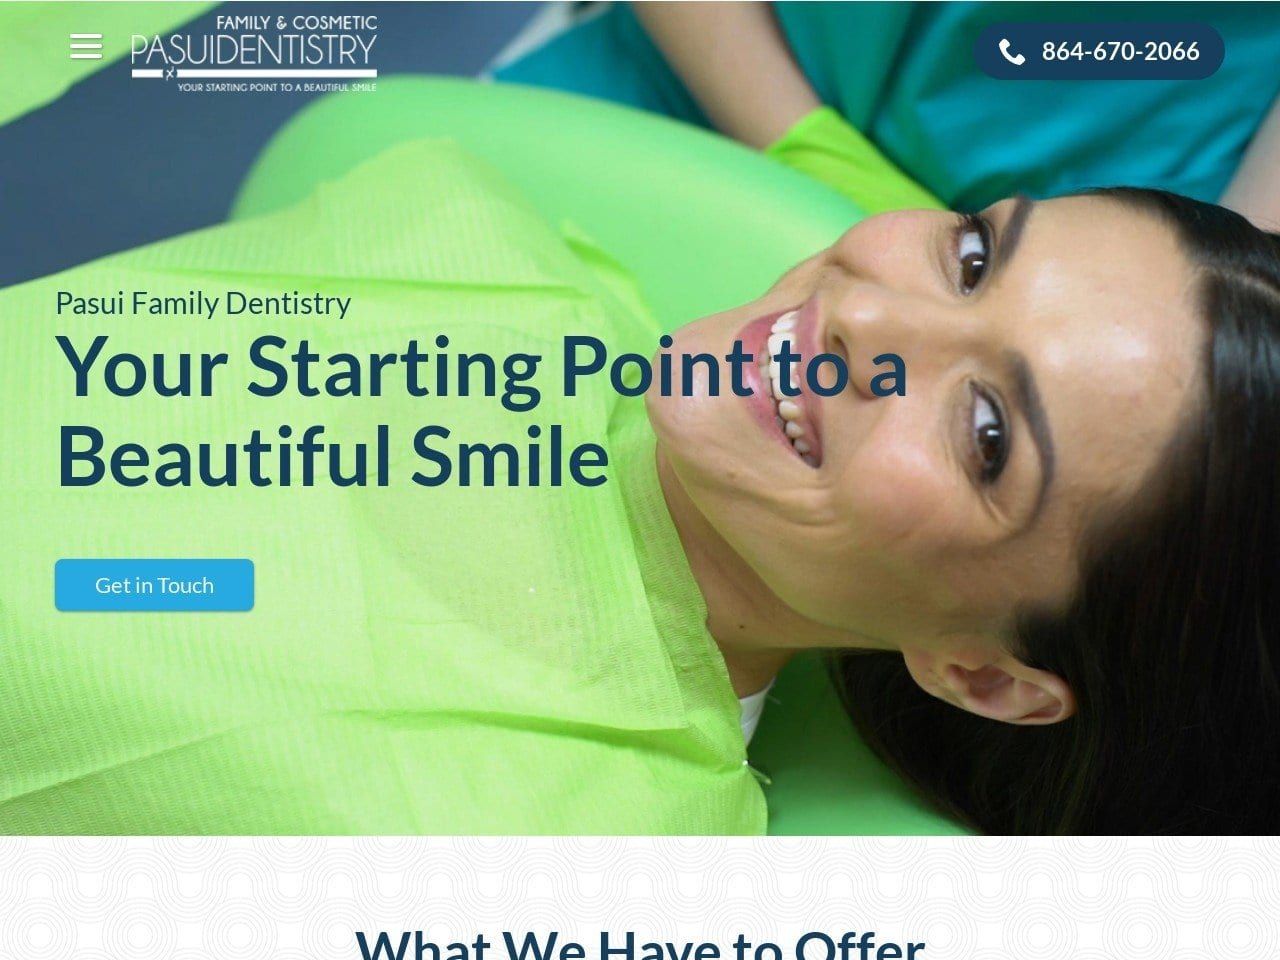 Pasui Family Dentist Website Screenshot from pasuidentistry.com